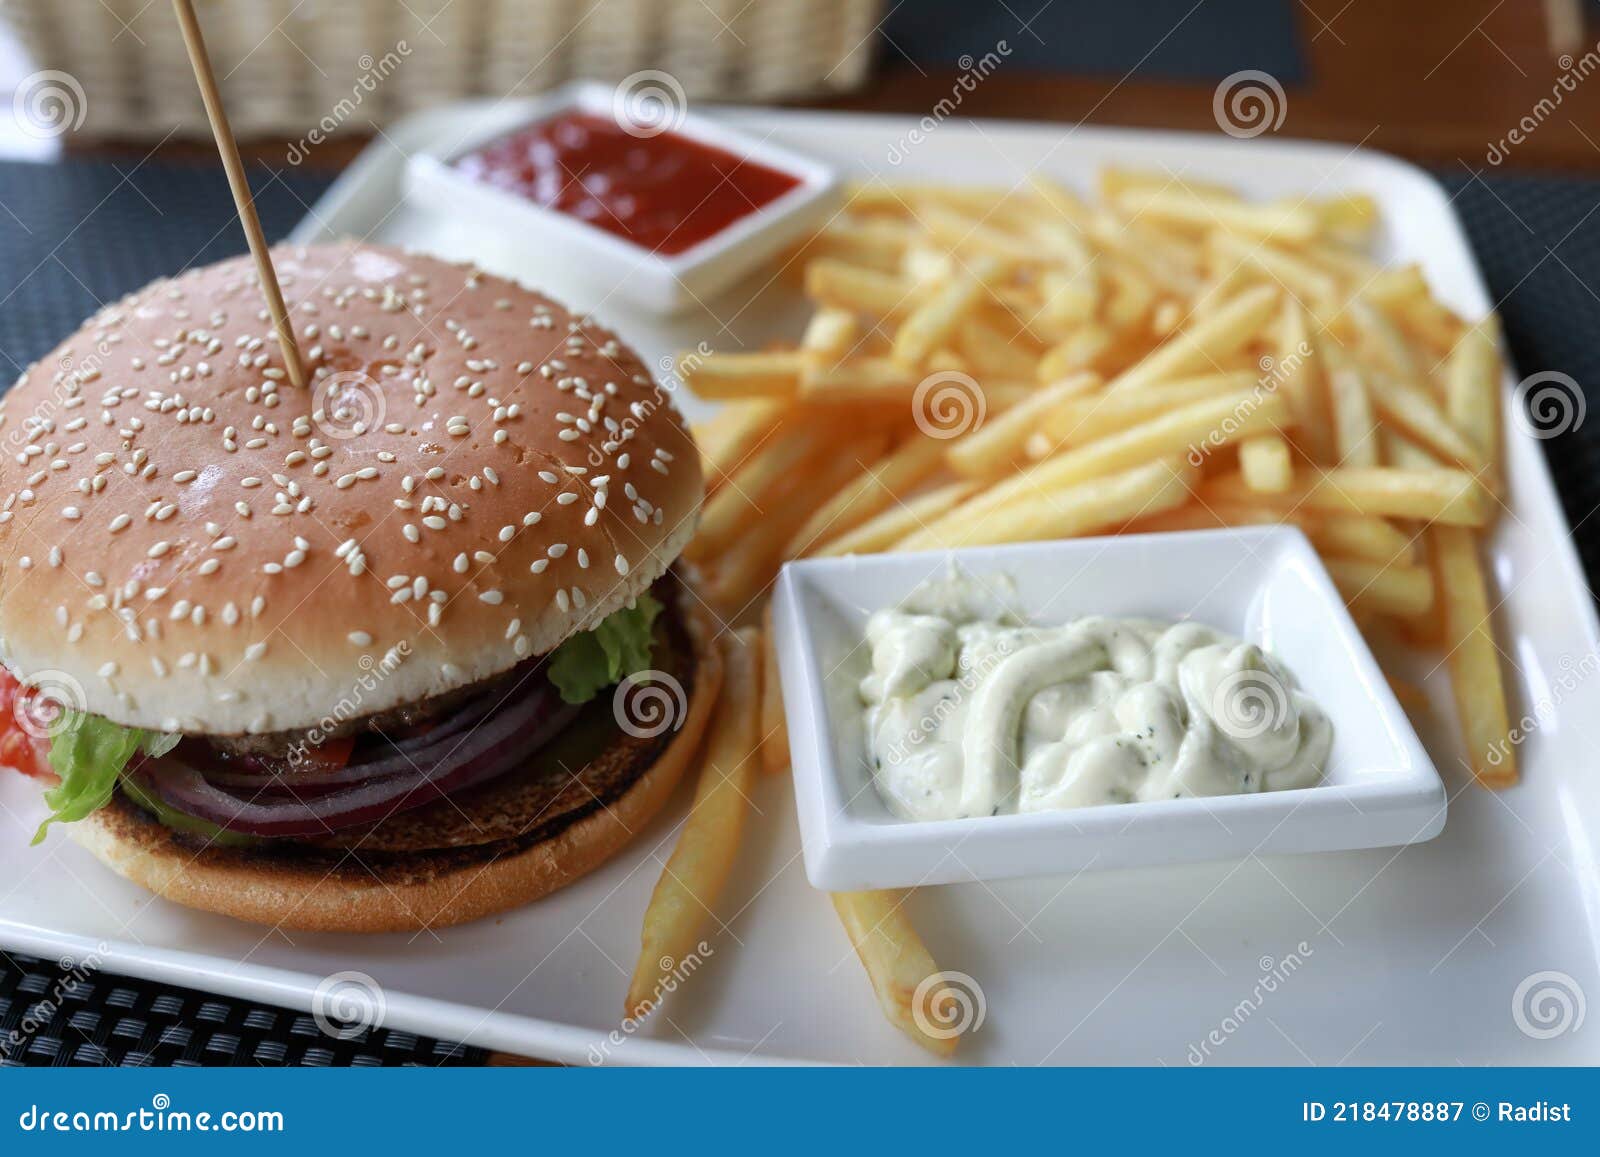 бургер с картошкой фри и соусом Стоковое Изображение - изображение  насчитывающей свеже, тарелка: 218478887